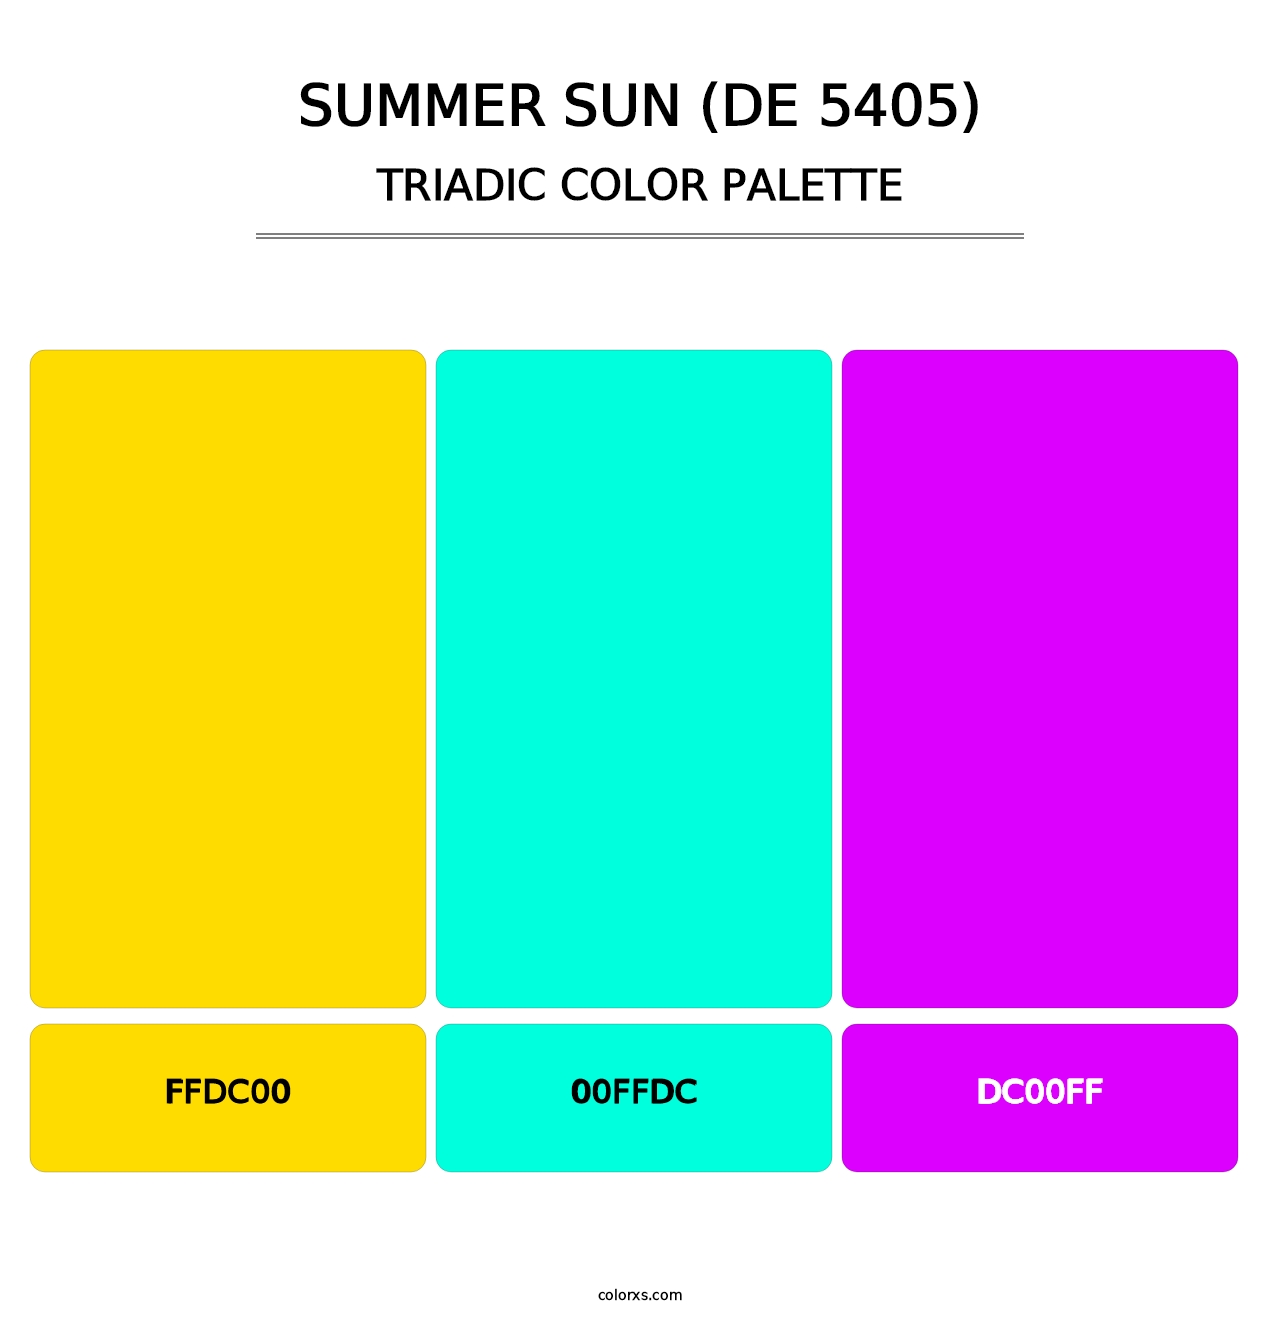 Summer Sun (DE 5405) - Triadic Color Palette